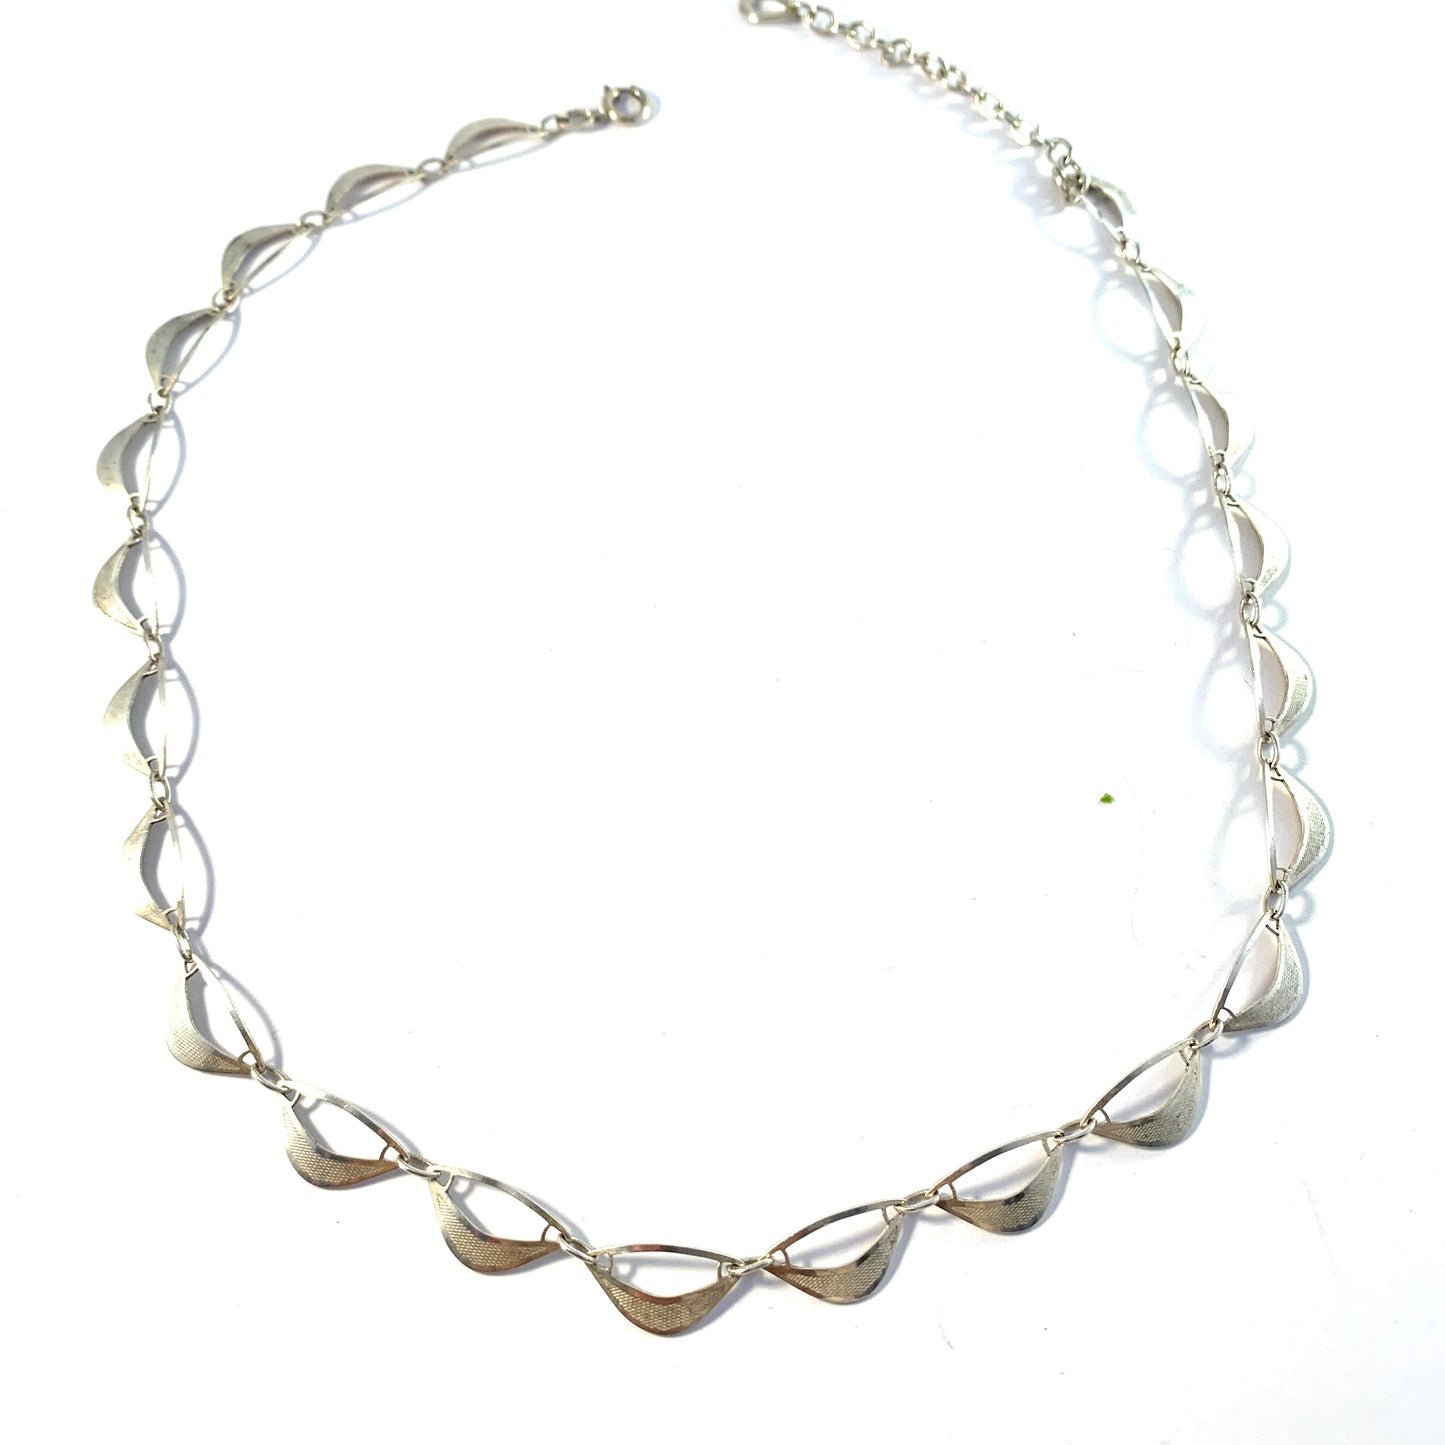 Friedrich Binder, Germany Vintage 1950s Solid Silver Necklace.